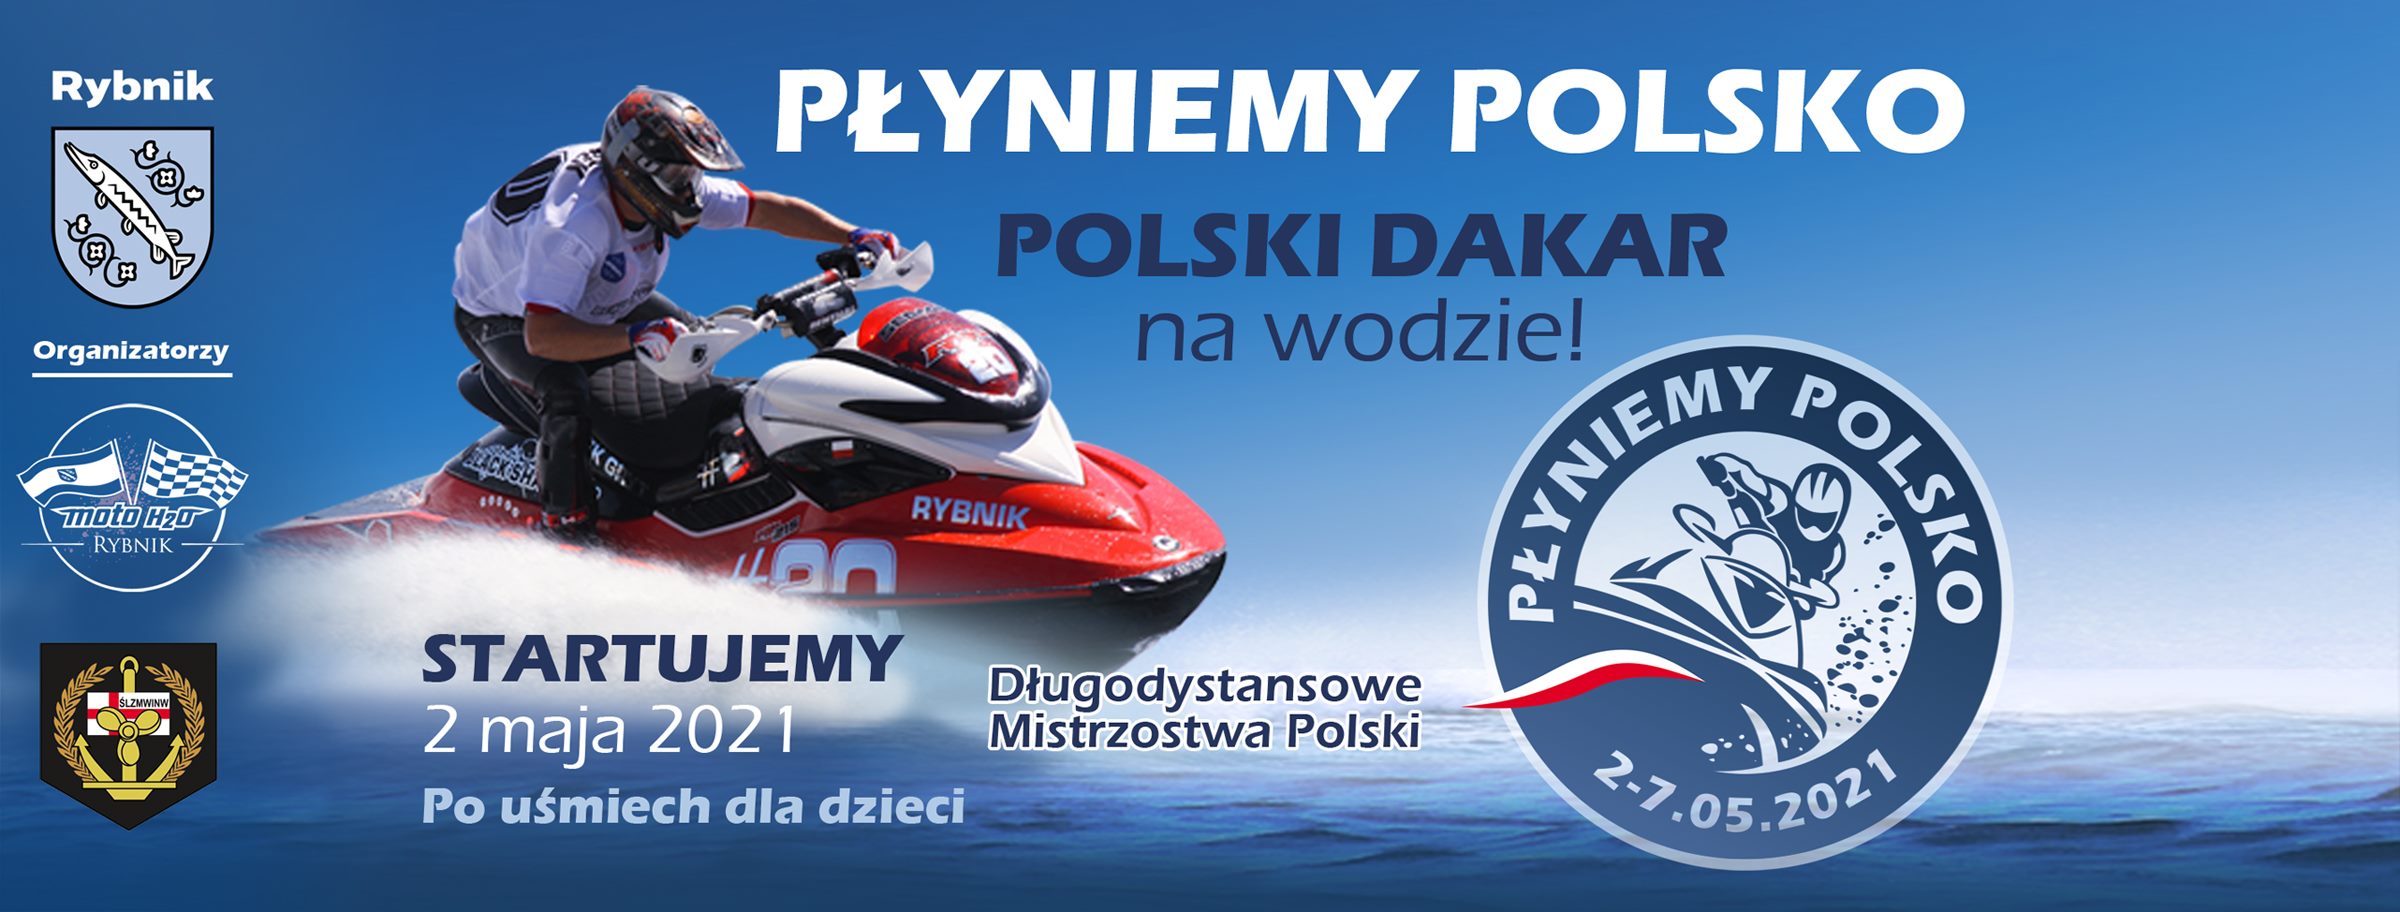 plyniemy polsko 2021